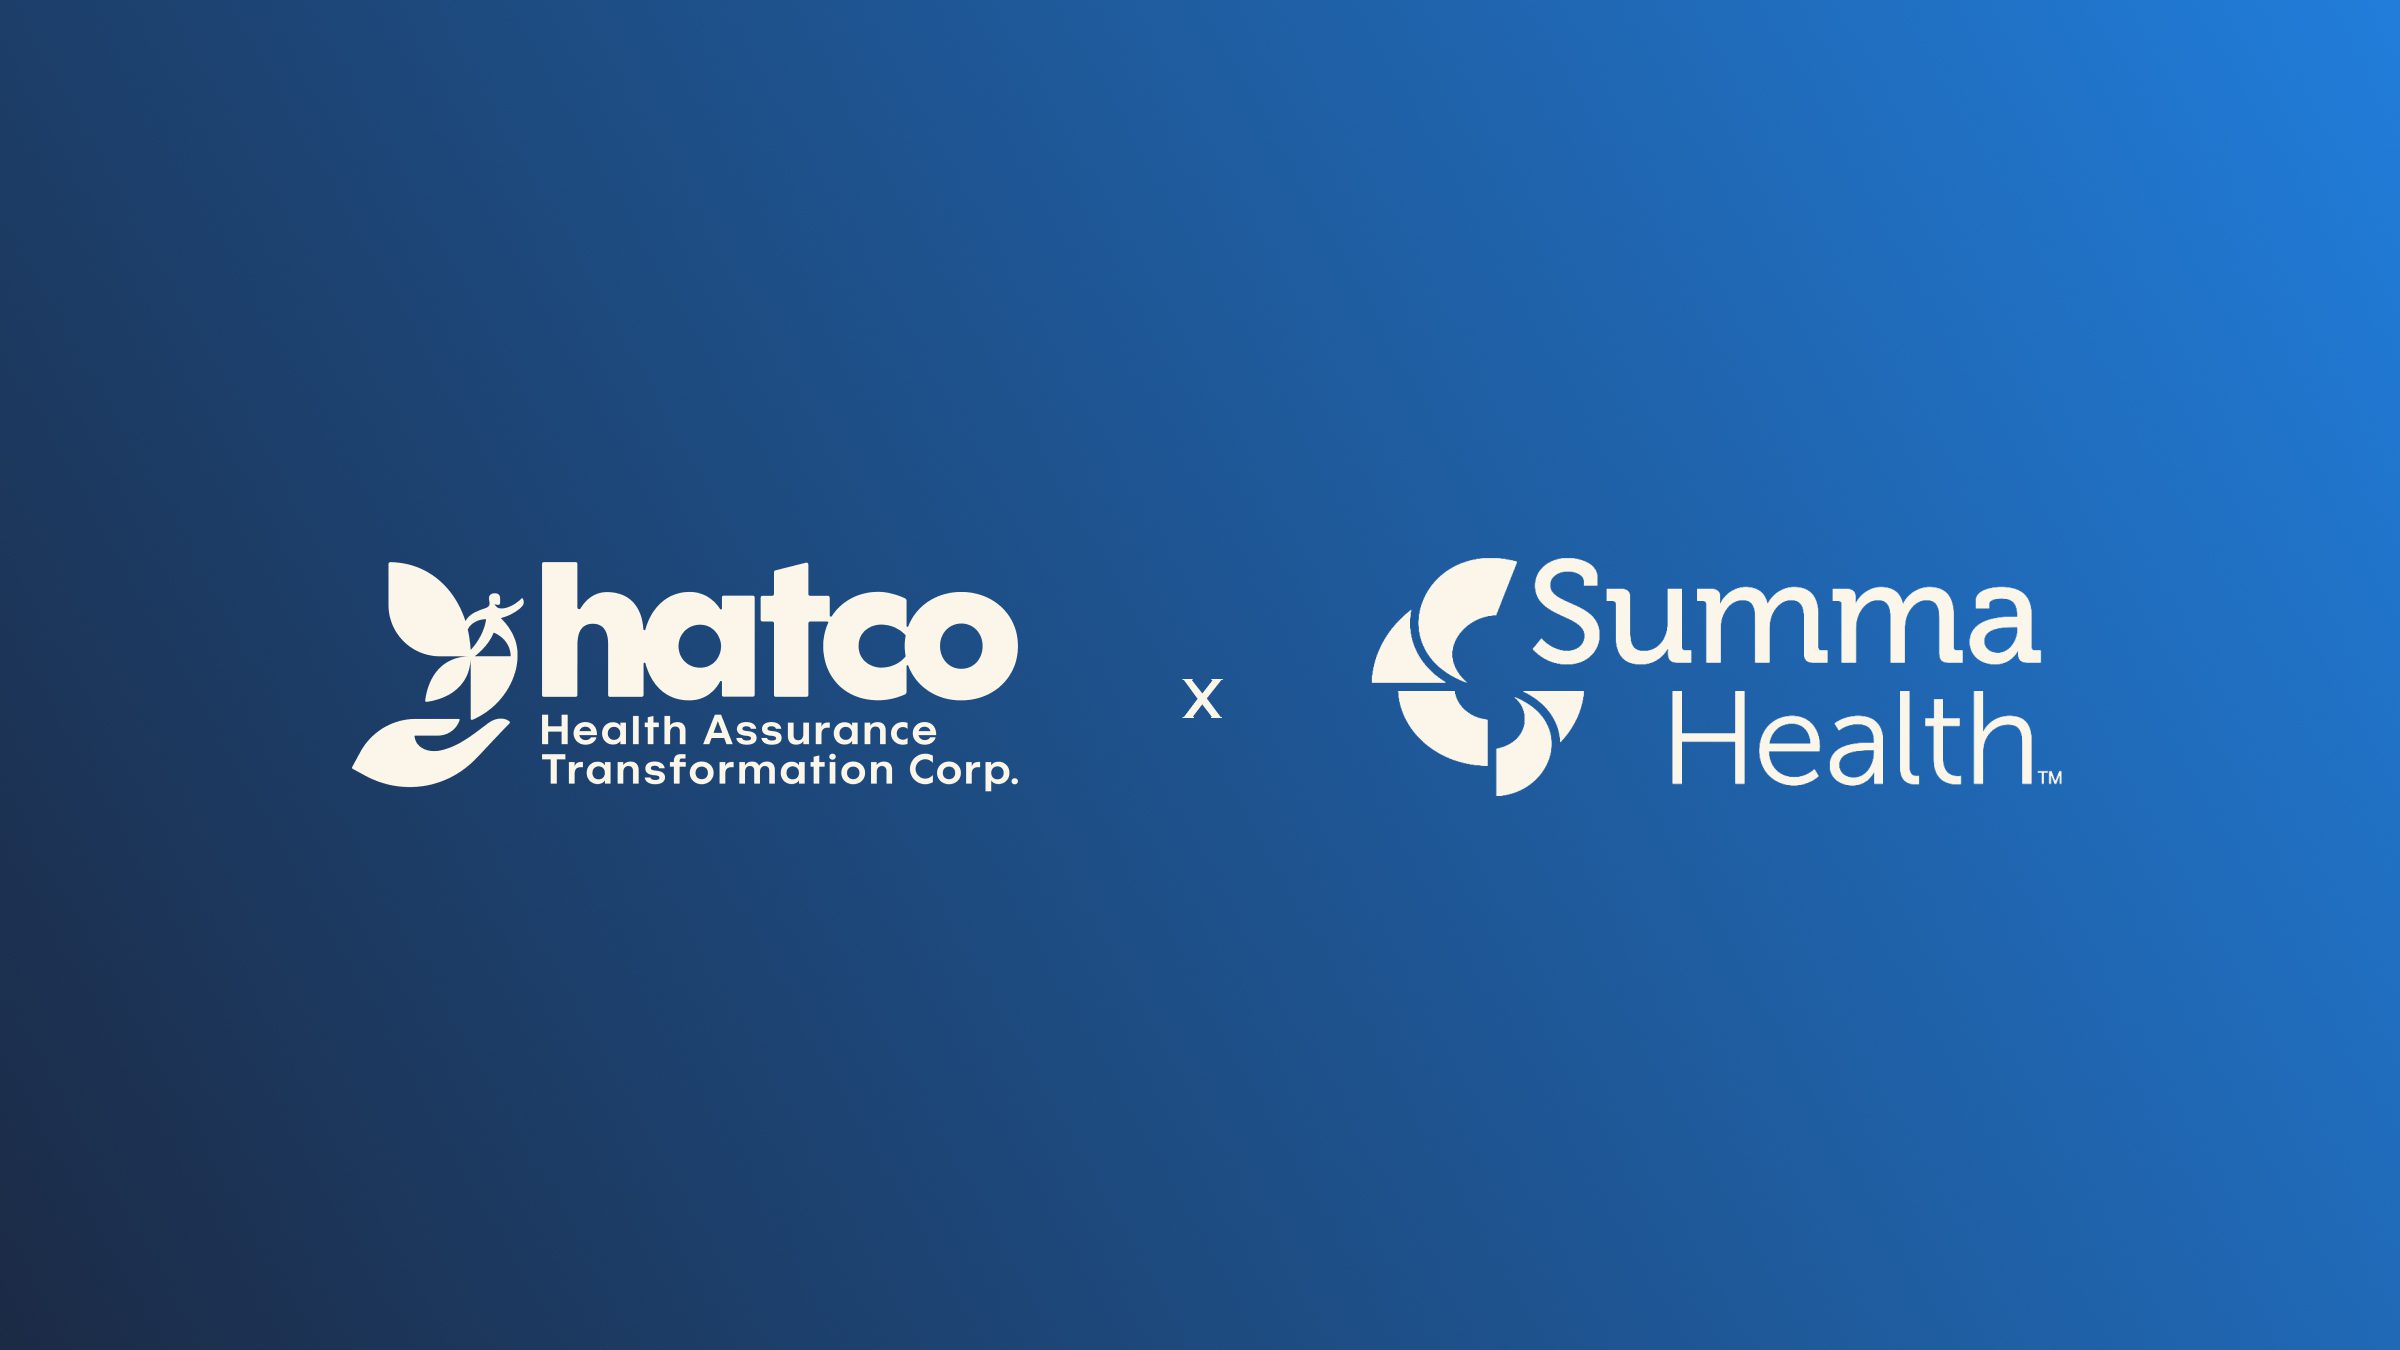 General Catalyst's HATCo to Acquire Summa Health - Health M&A